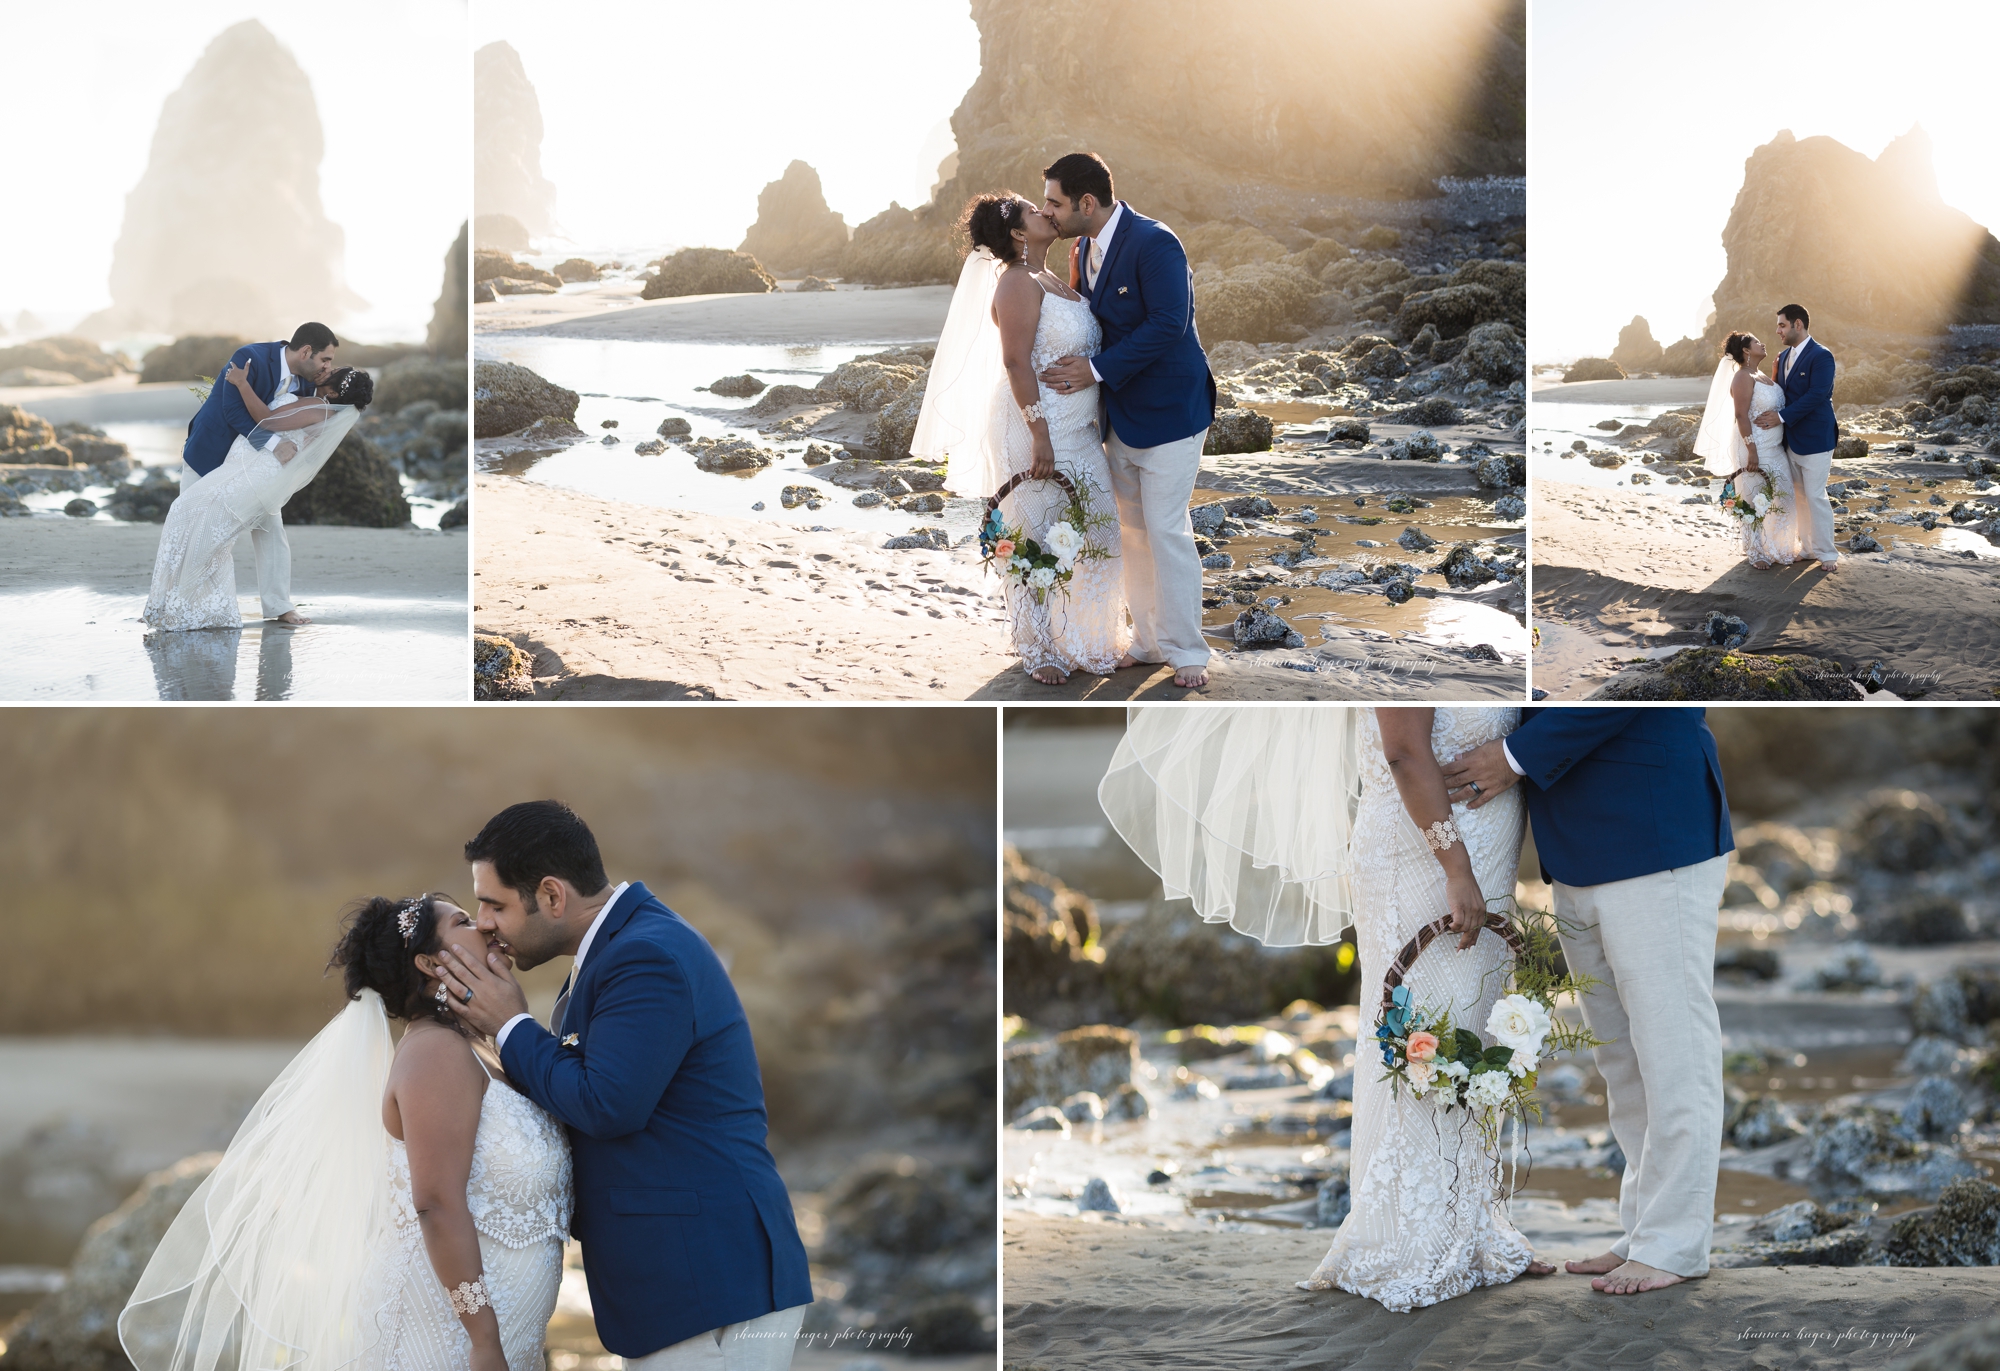 cannon beach wedding photographer, oregon coast wedding photographer, oregon elopement photography, shannon hager photography